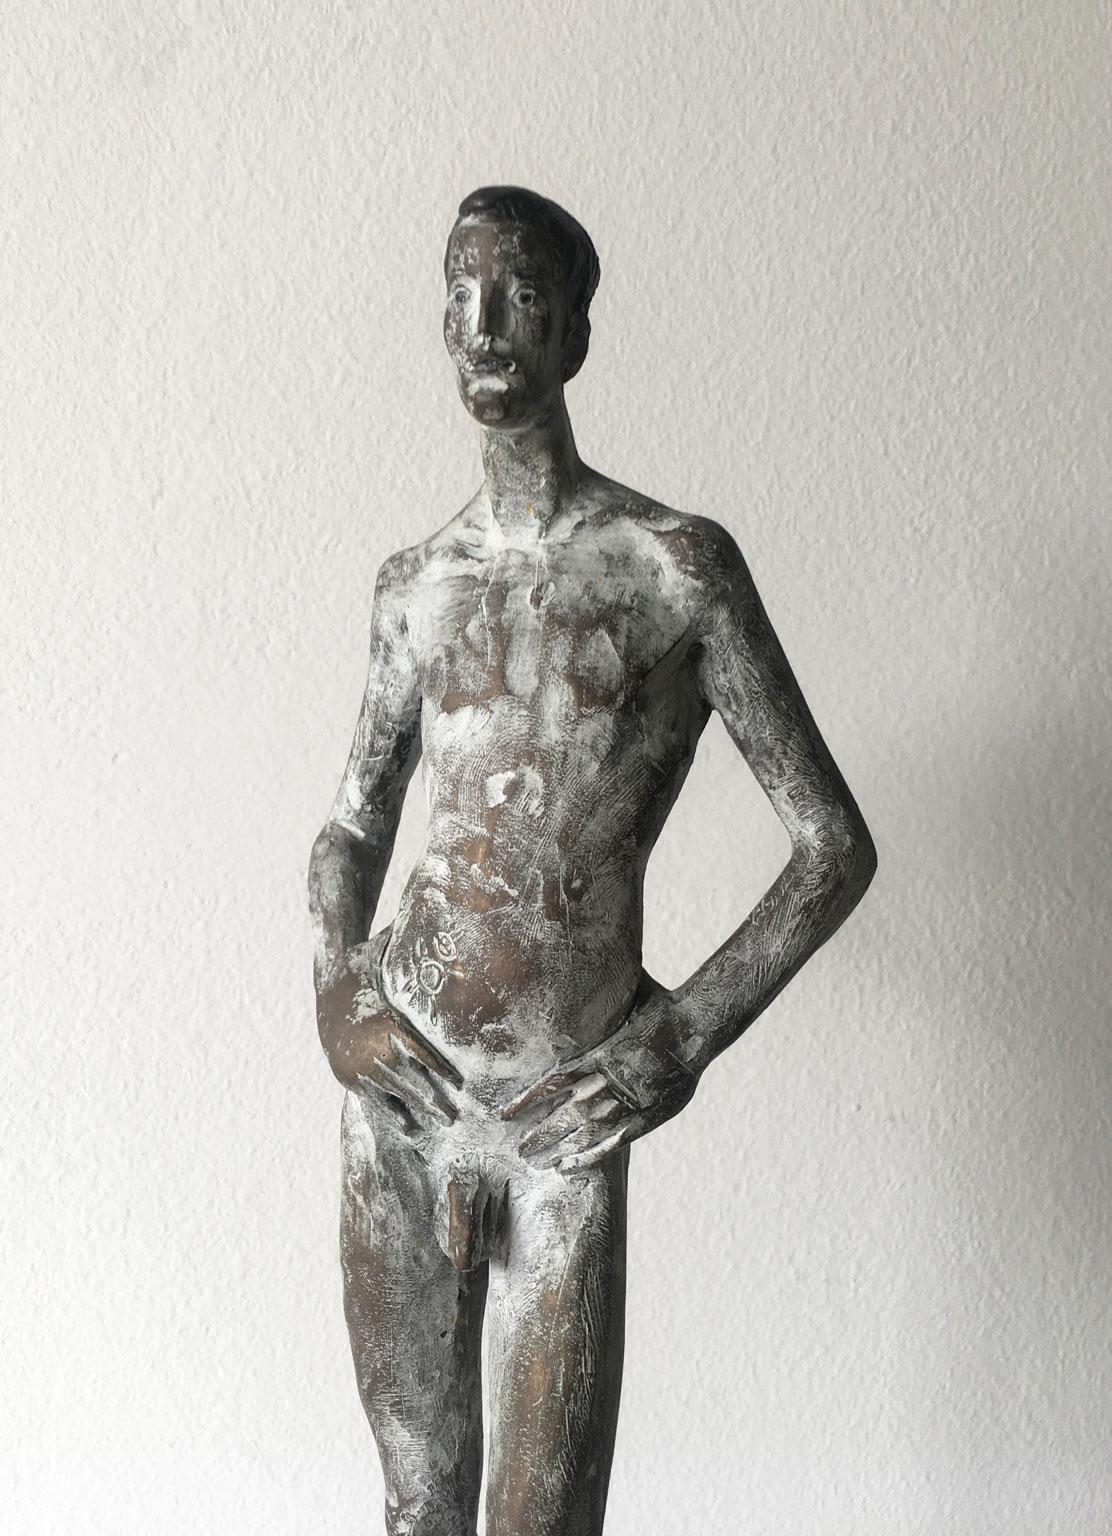 Italy Cast Bronze Figurine Man Sculpture by Aron Demetz Title Ricordo In Good Condition For Sale In Brescia, IT